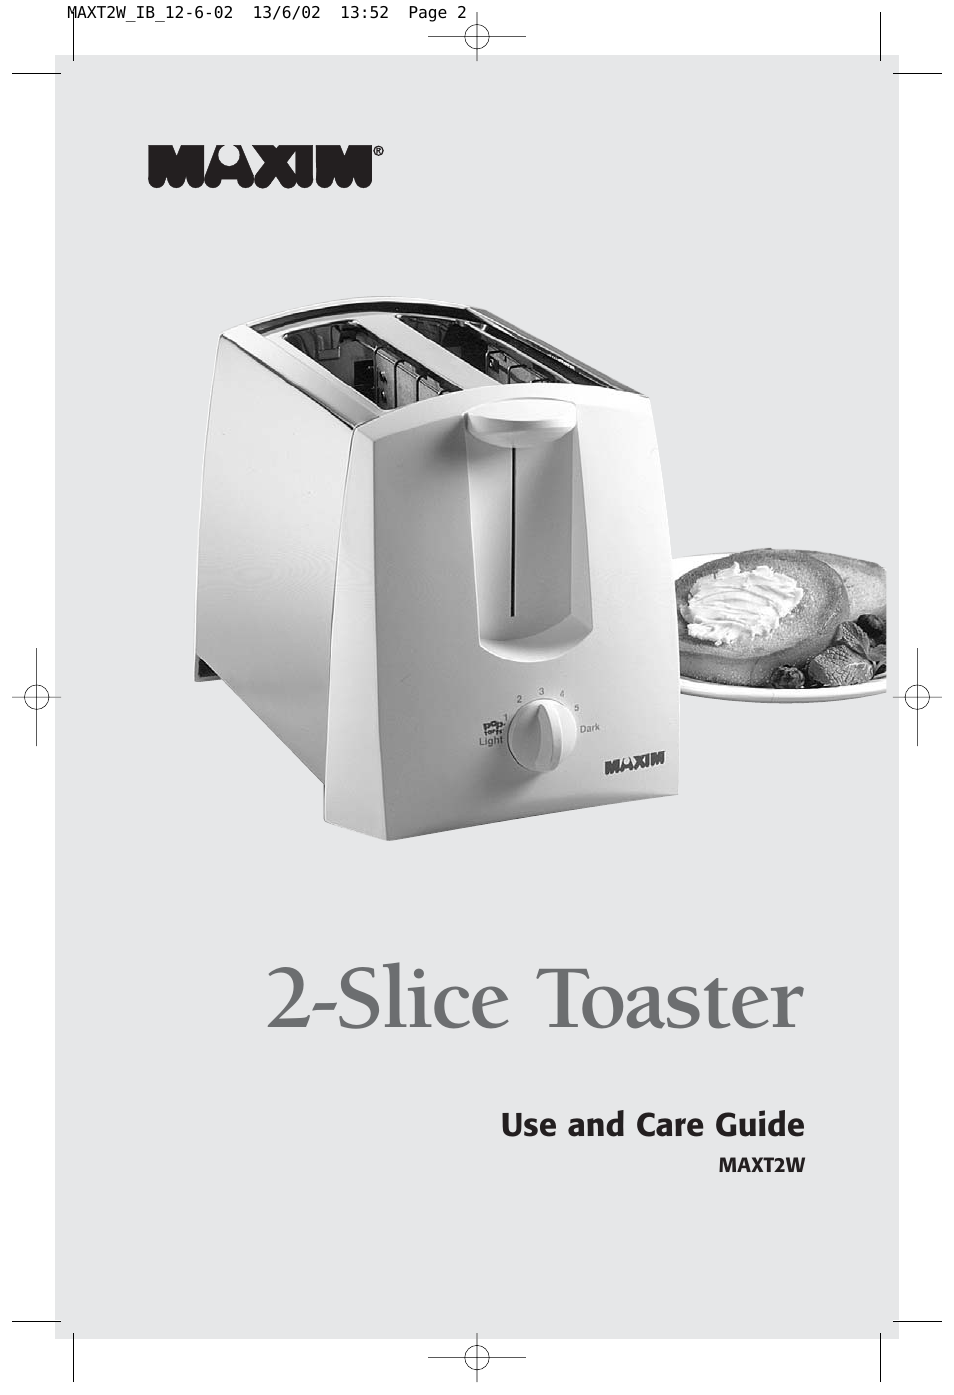 2-Slice Toaster MAXT2W